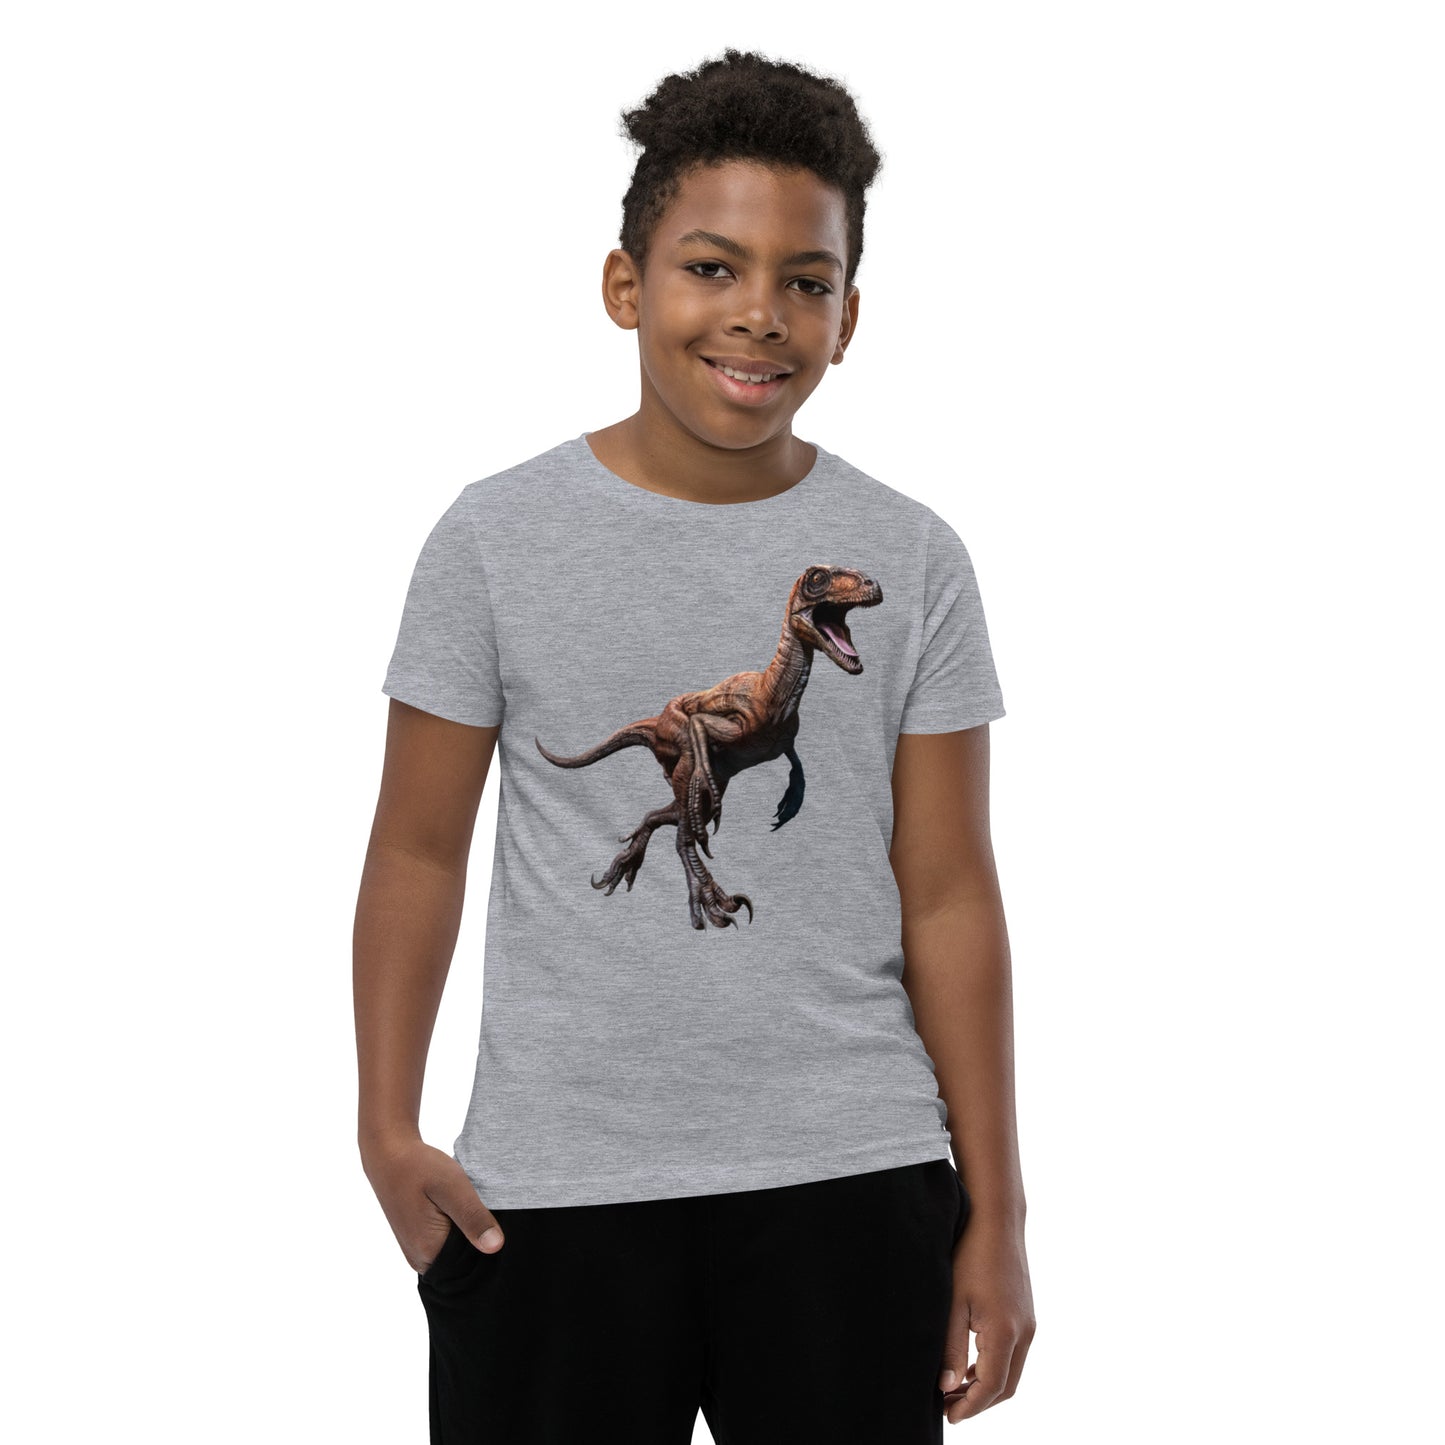 Raptor Youth Short Sleeve T-Shirt